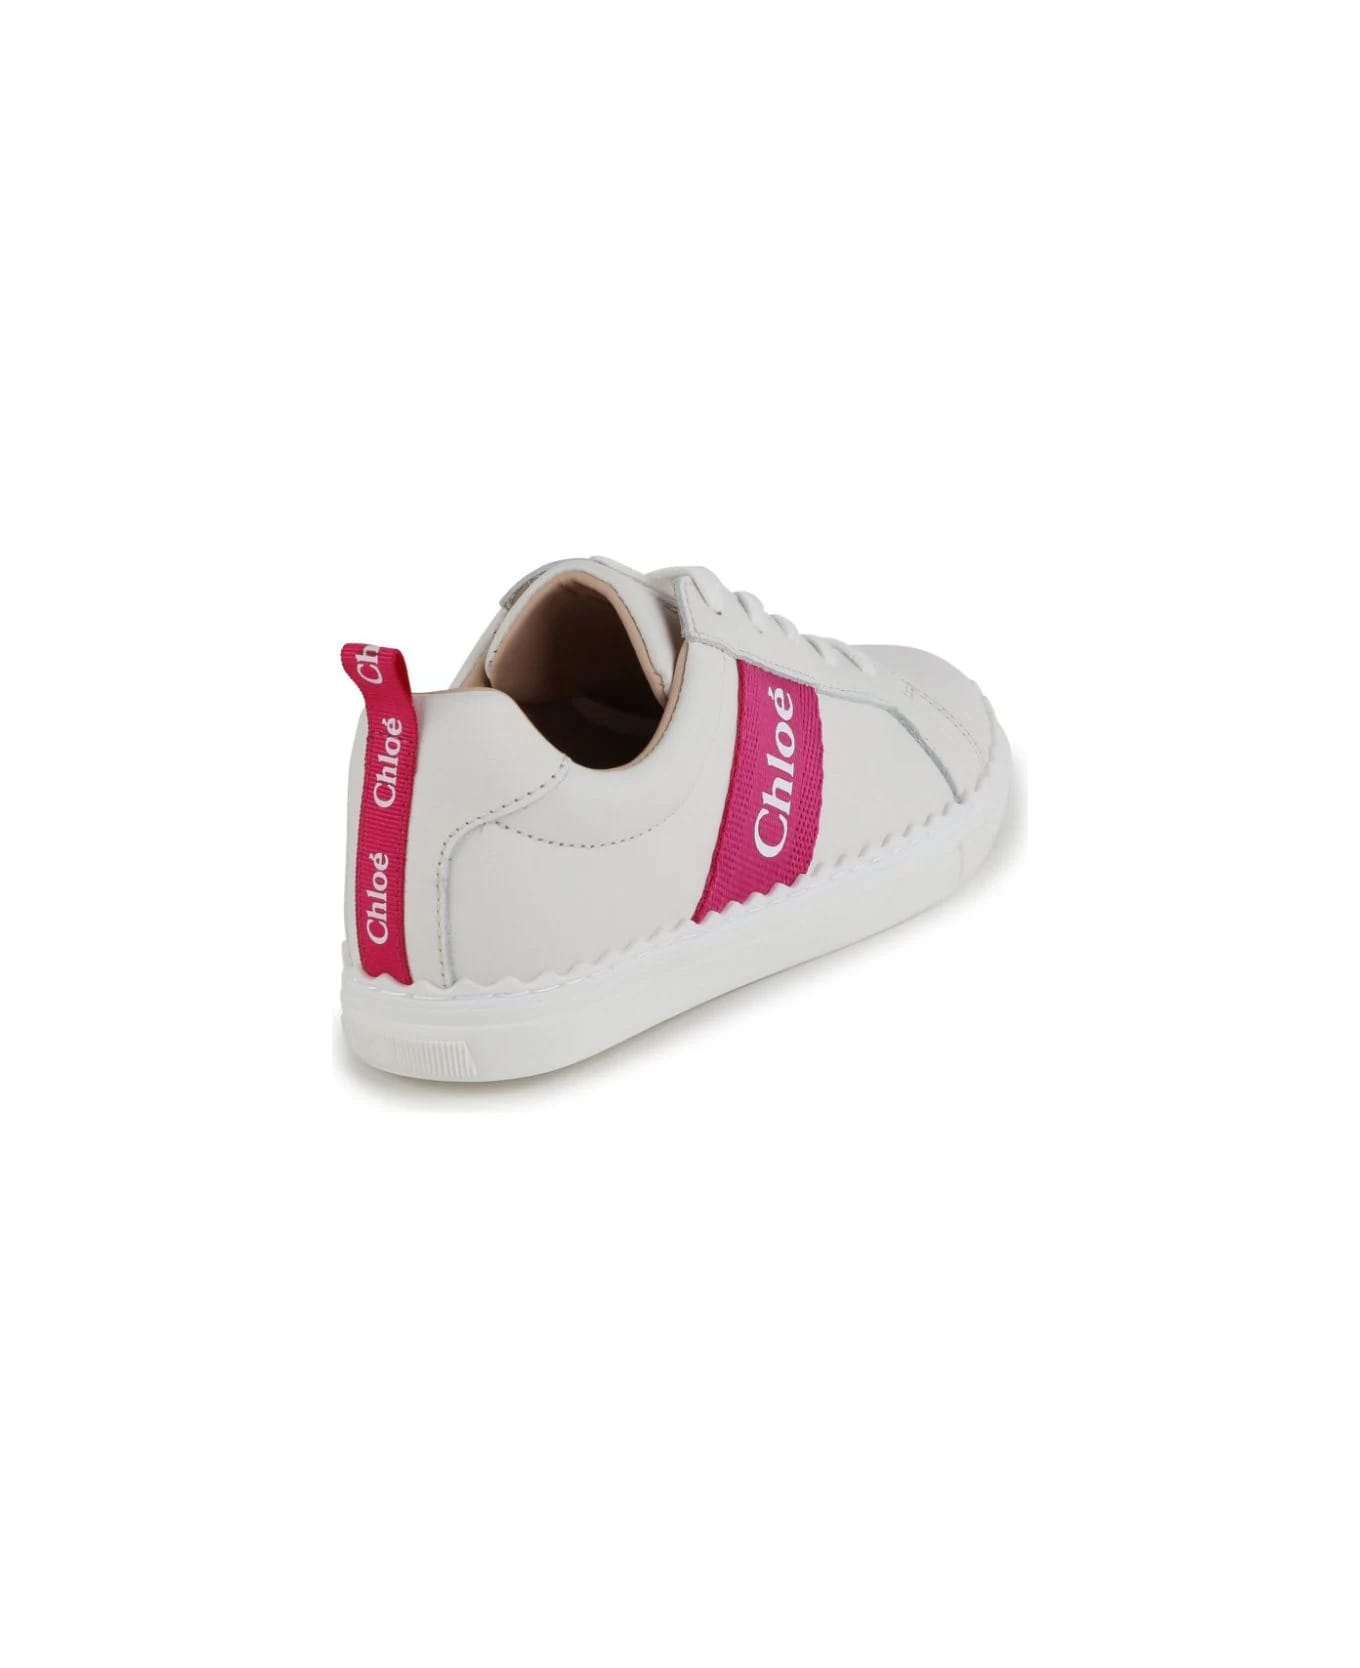 Chloé White And Fuchsia Lauren Low Sneakers - White